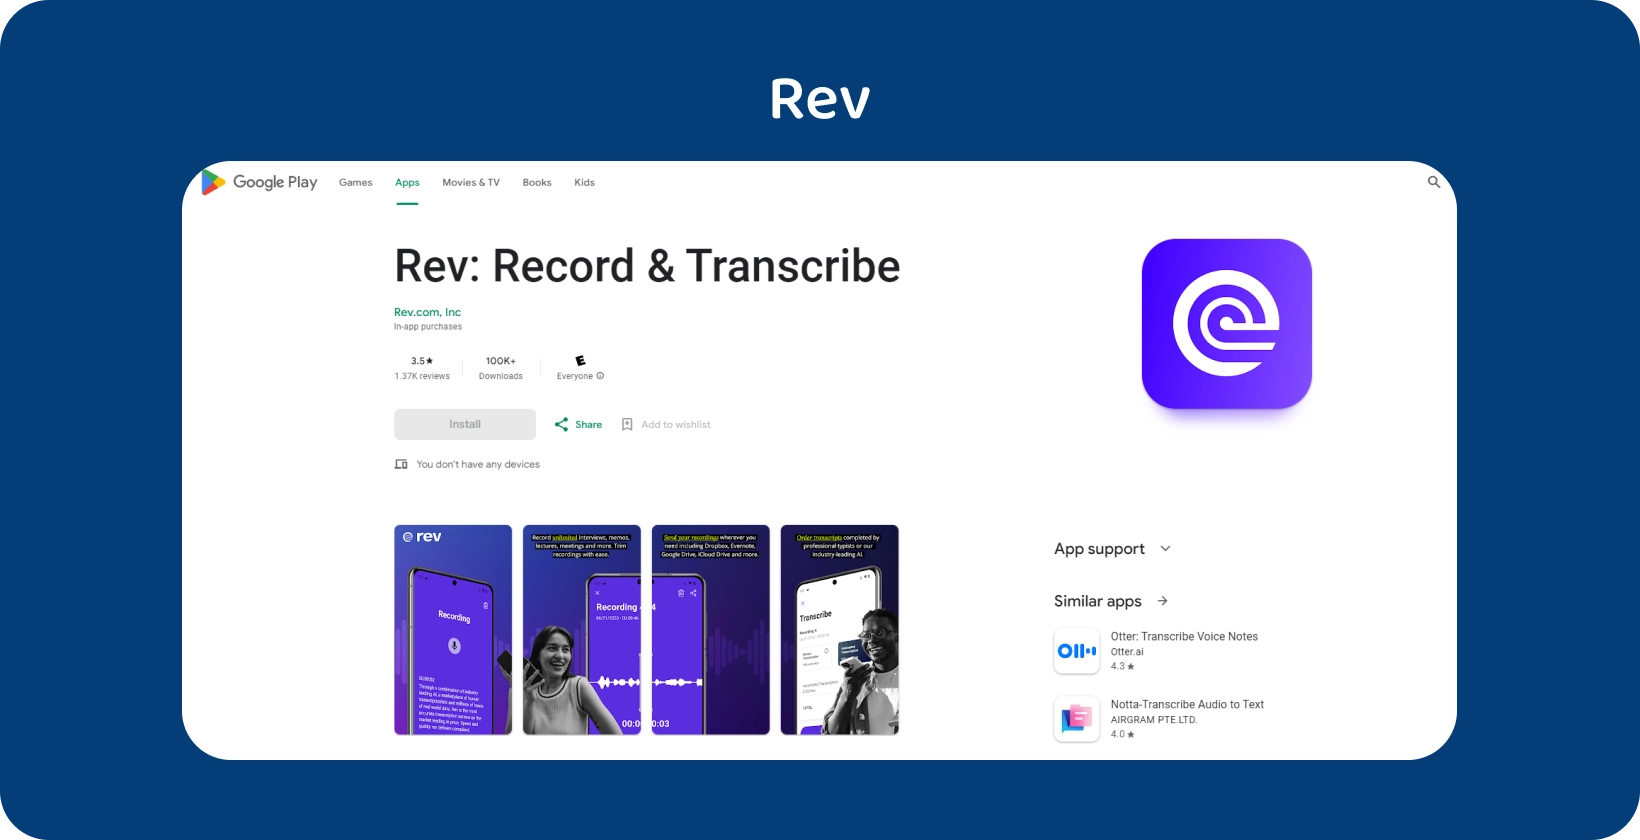 Google Play Store εμφάνιση της εφαρμογής Rev, επισημαίνοντας λειτουργίες εγγραφής και μεταγραφής σε συσκευές Android.